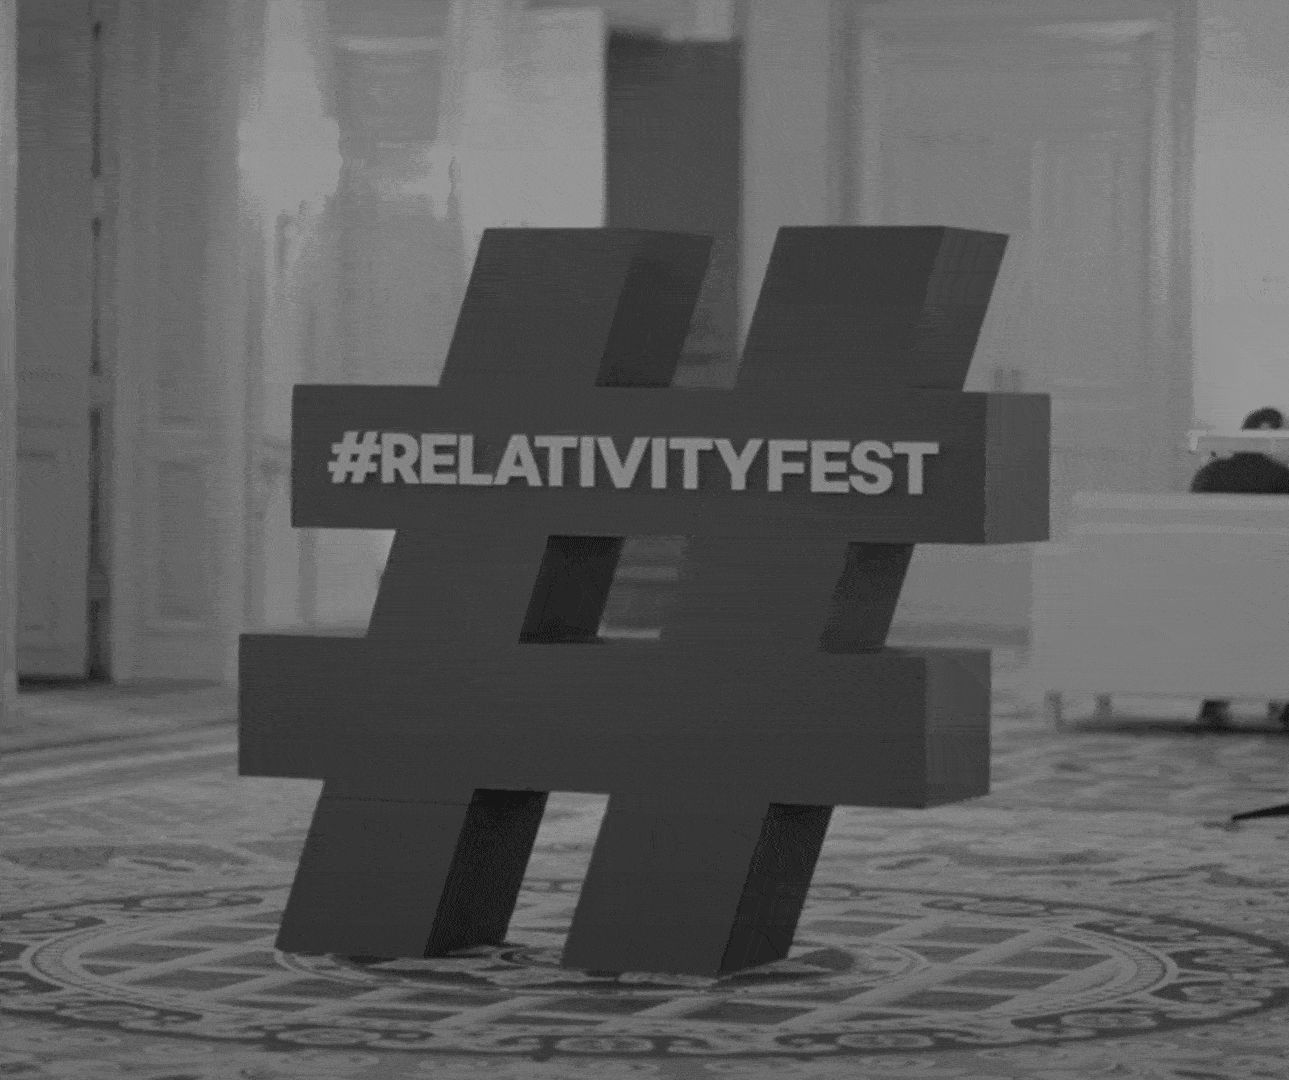 Relativity Fest hashtag